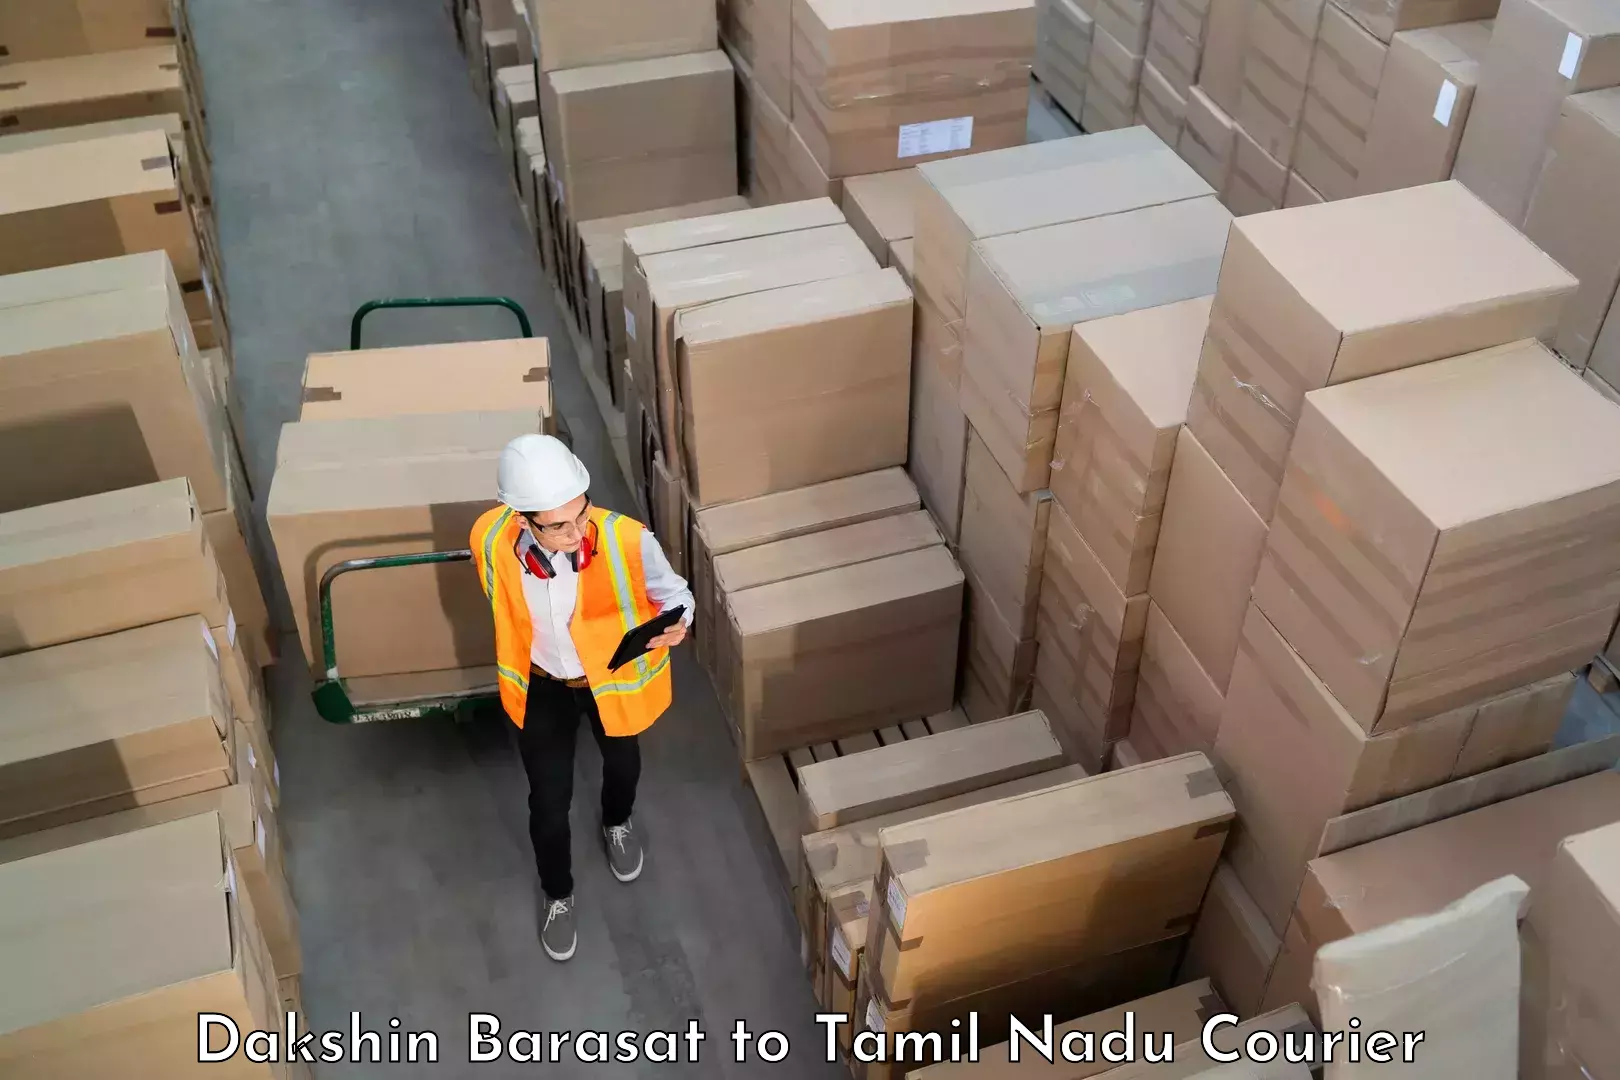 Luggage delivery app Dakshin Barasat to Sattur